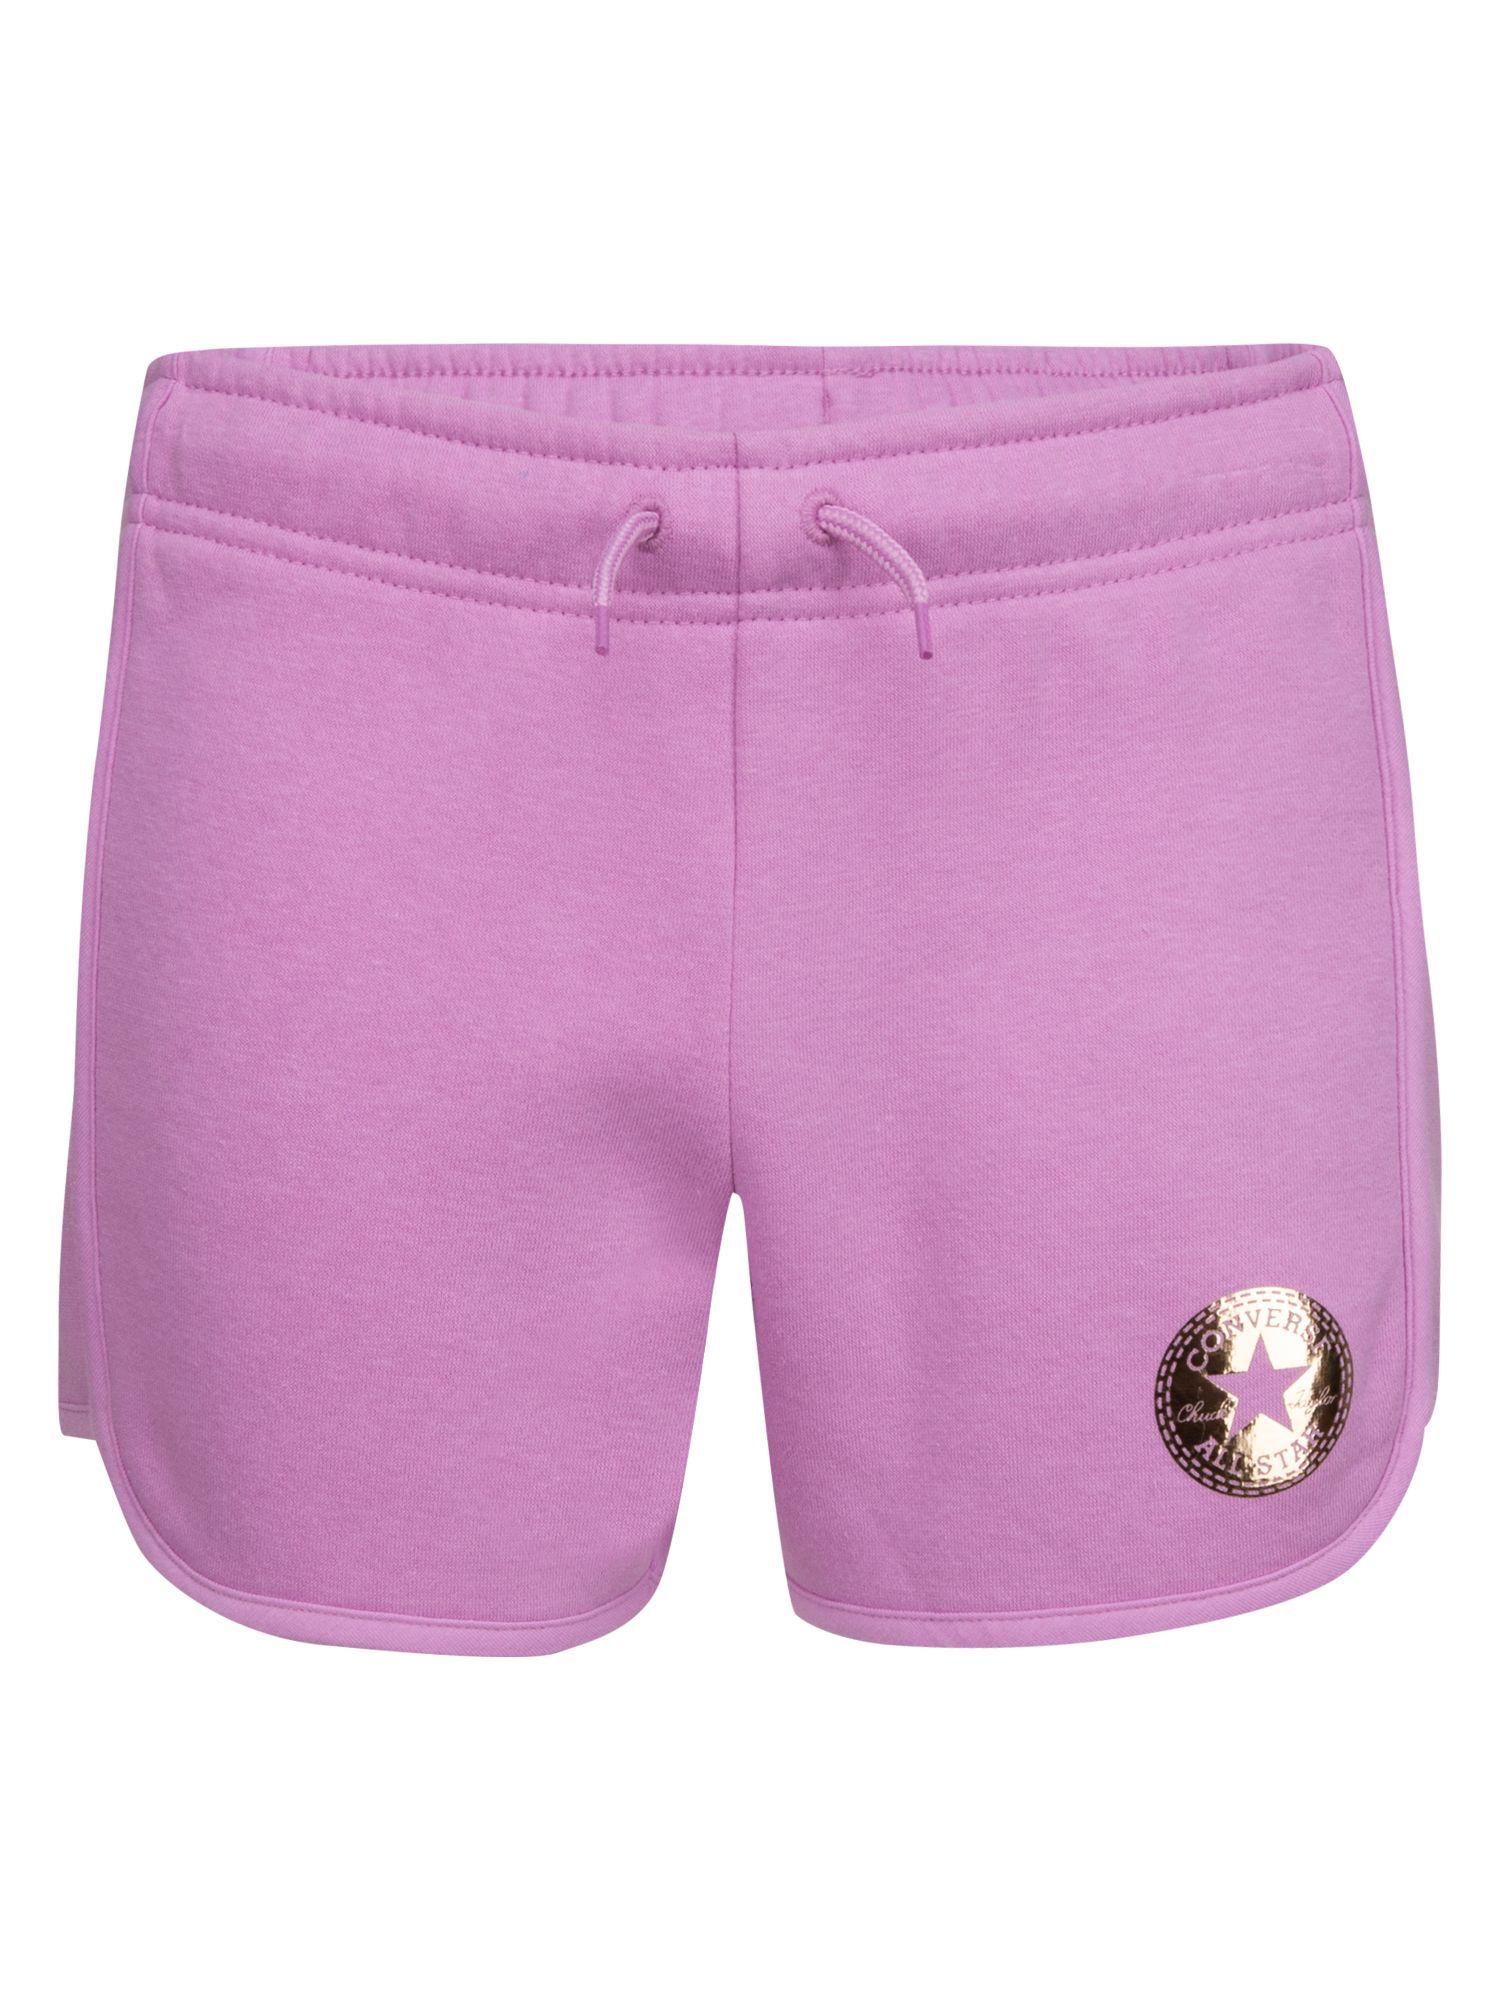 girls-purple-solid-plain-shorts